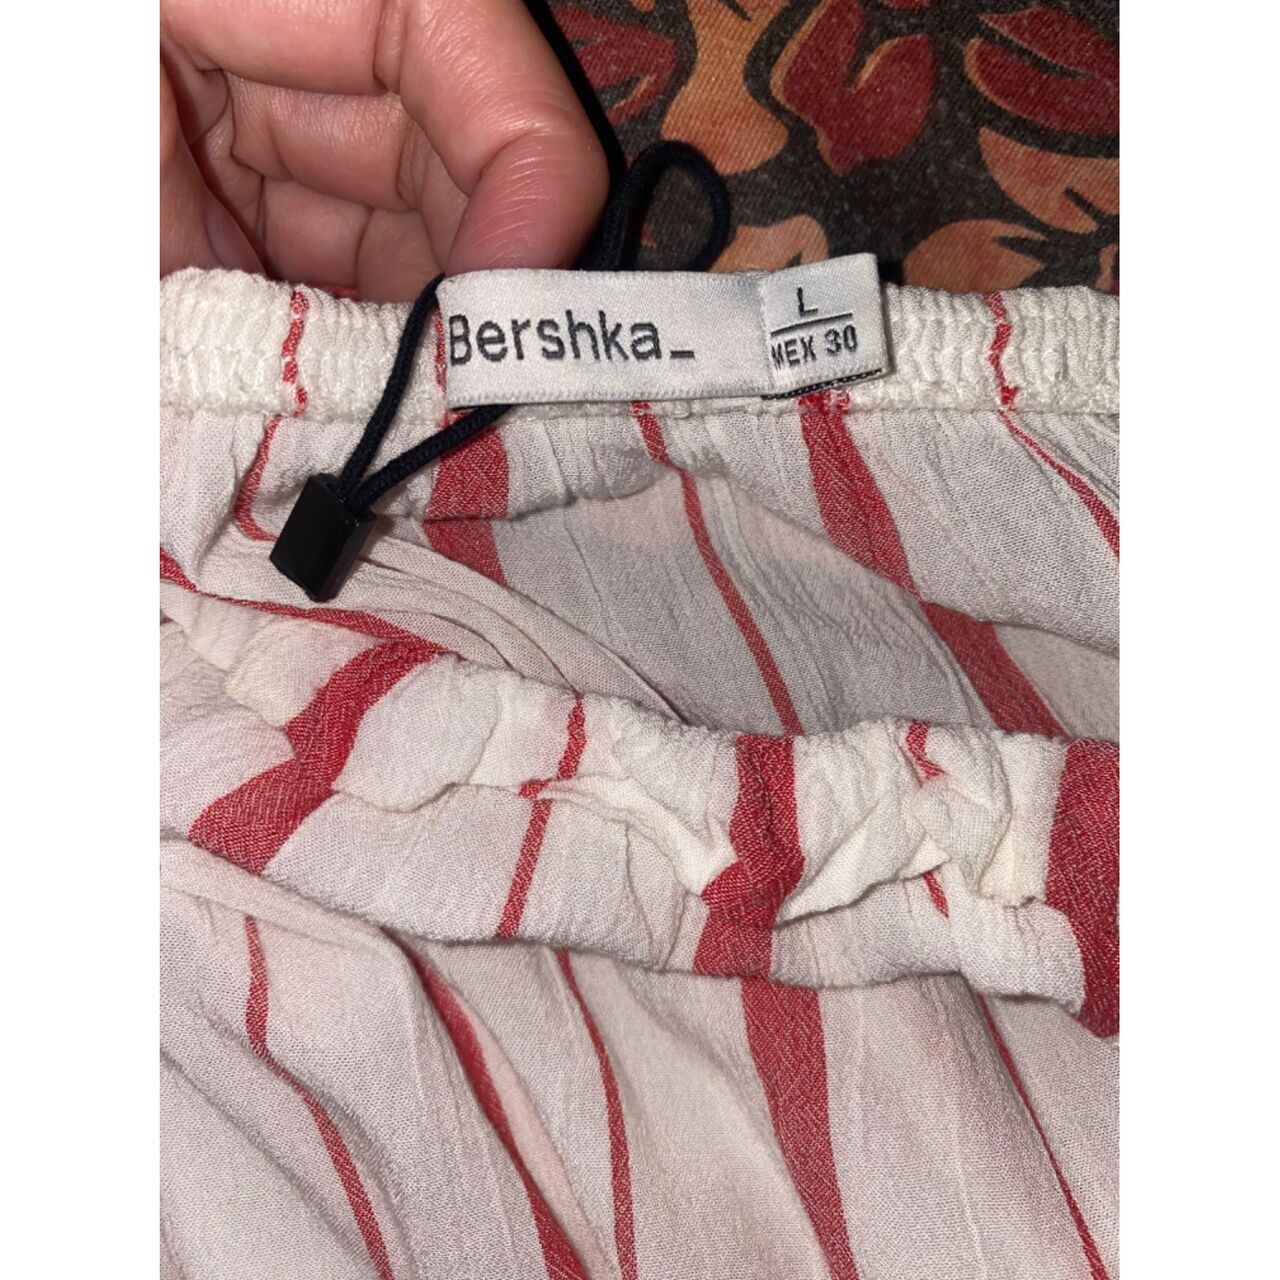 Bershka White Stripes Blouse Sabrina